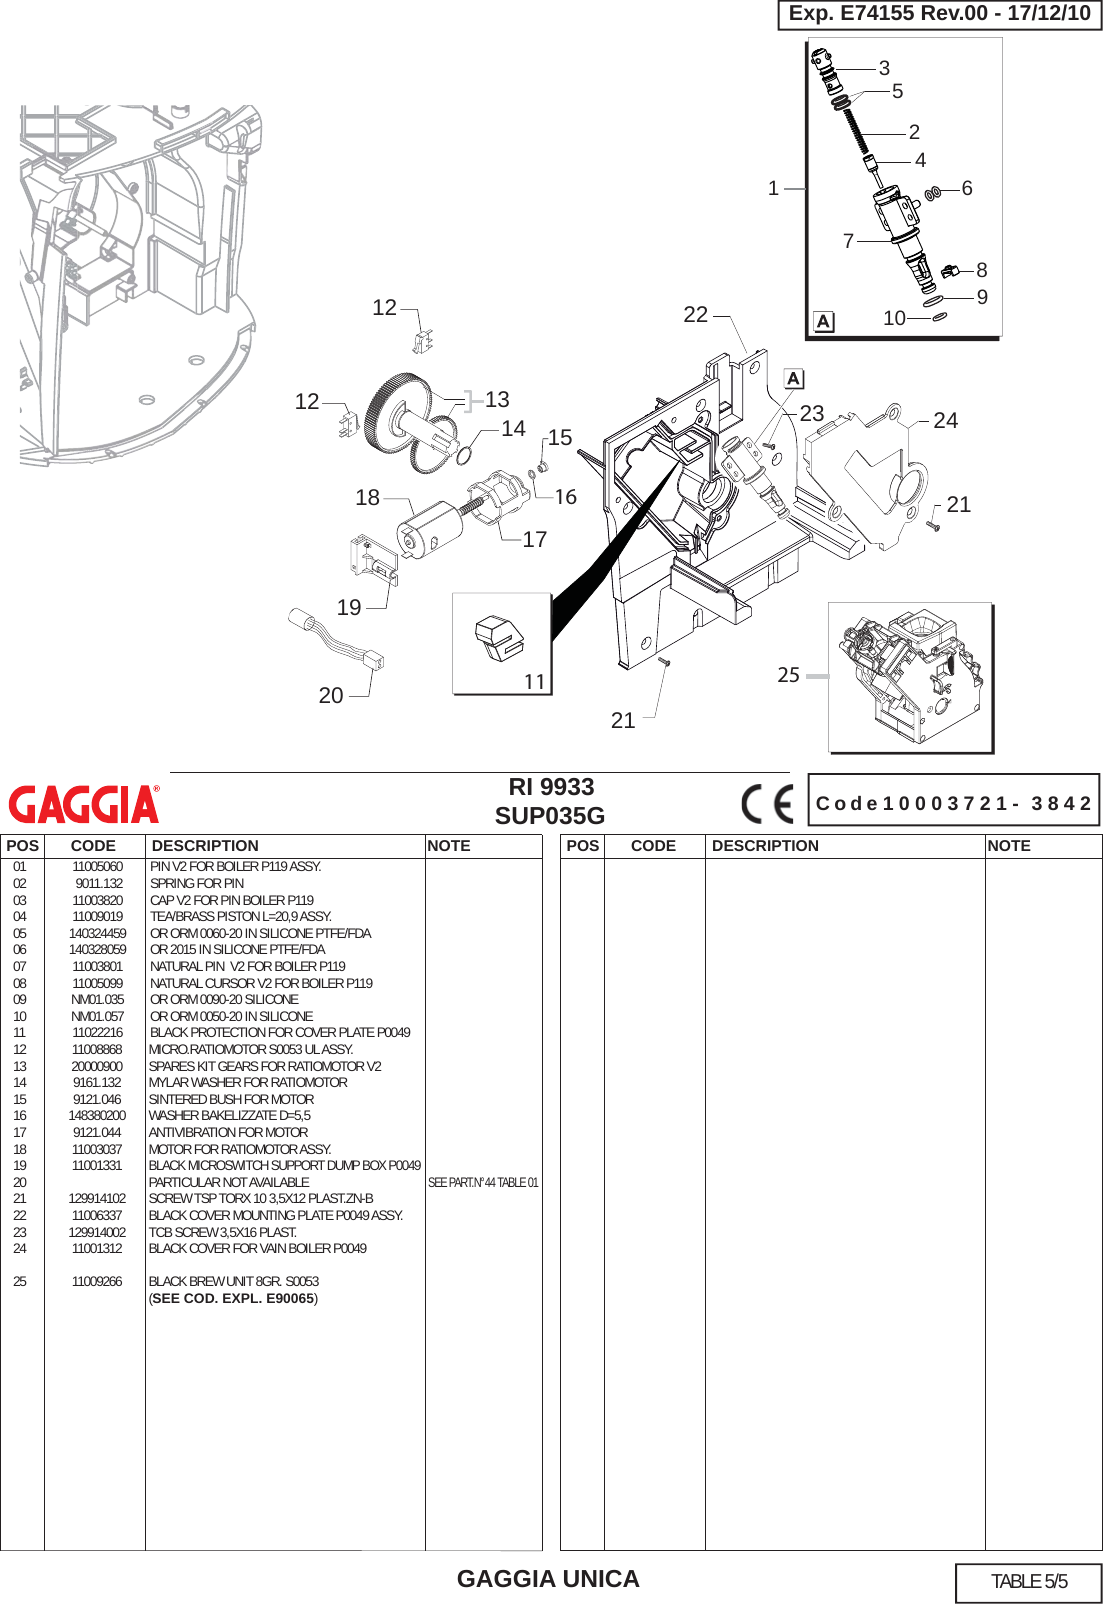 Page 5 of 5 - Gaggia Unica Parts Diagram E74155 Rev.00(SUP035G) User Manual